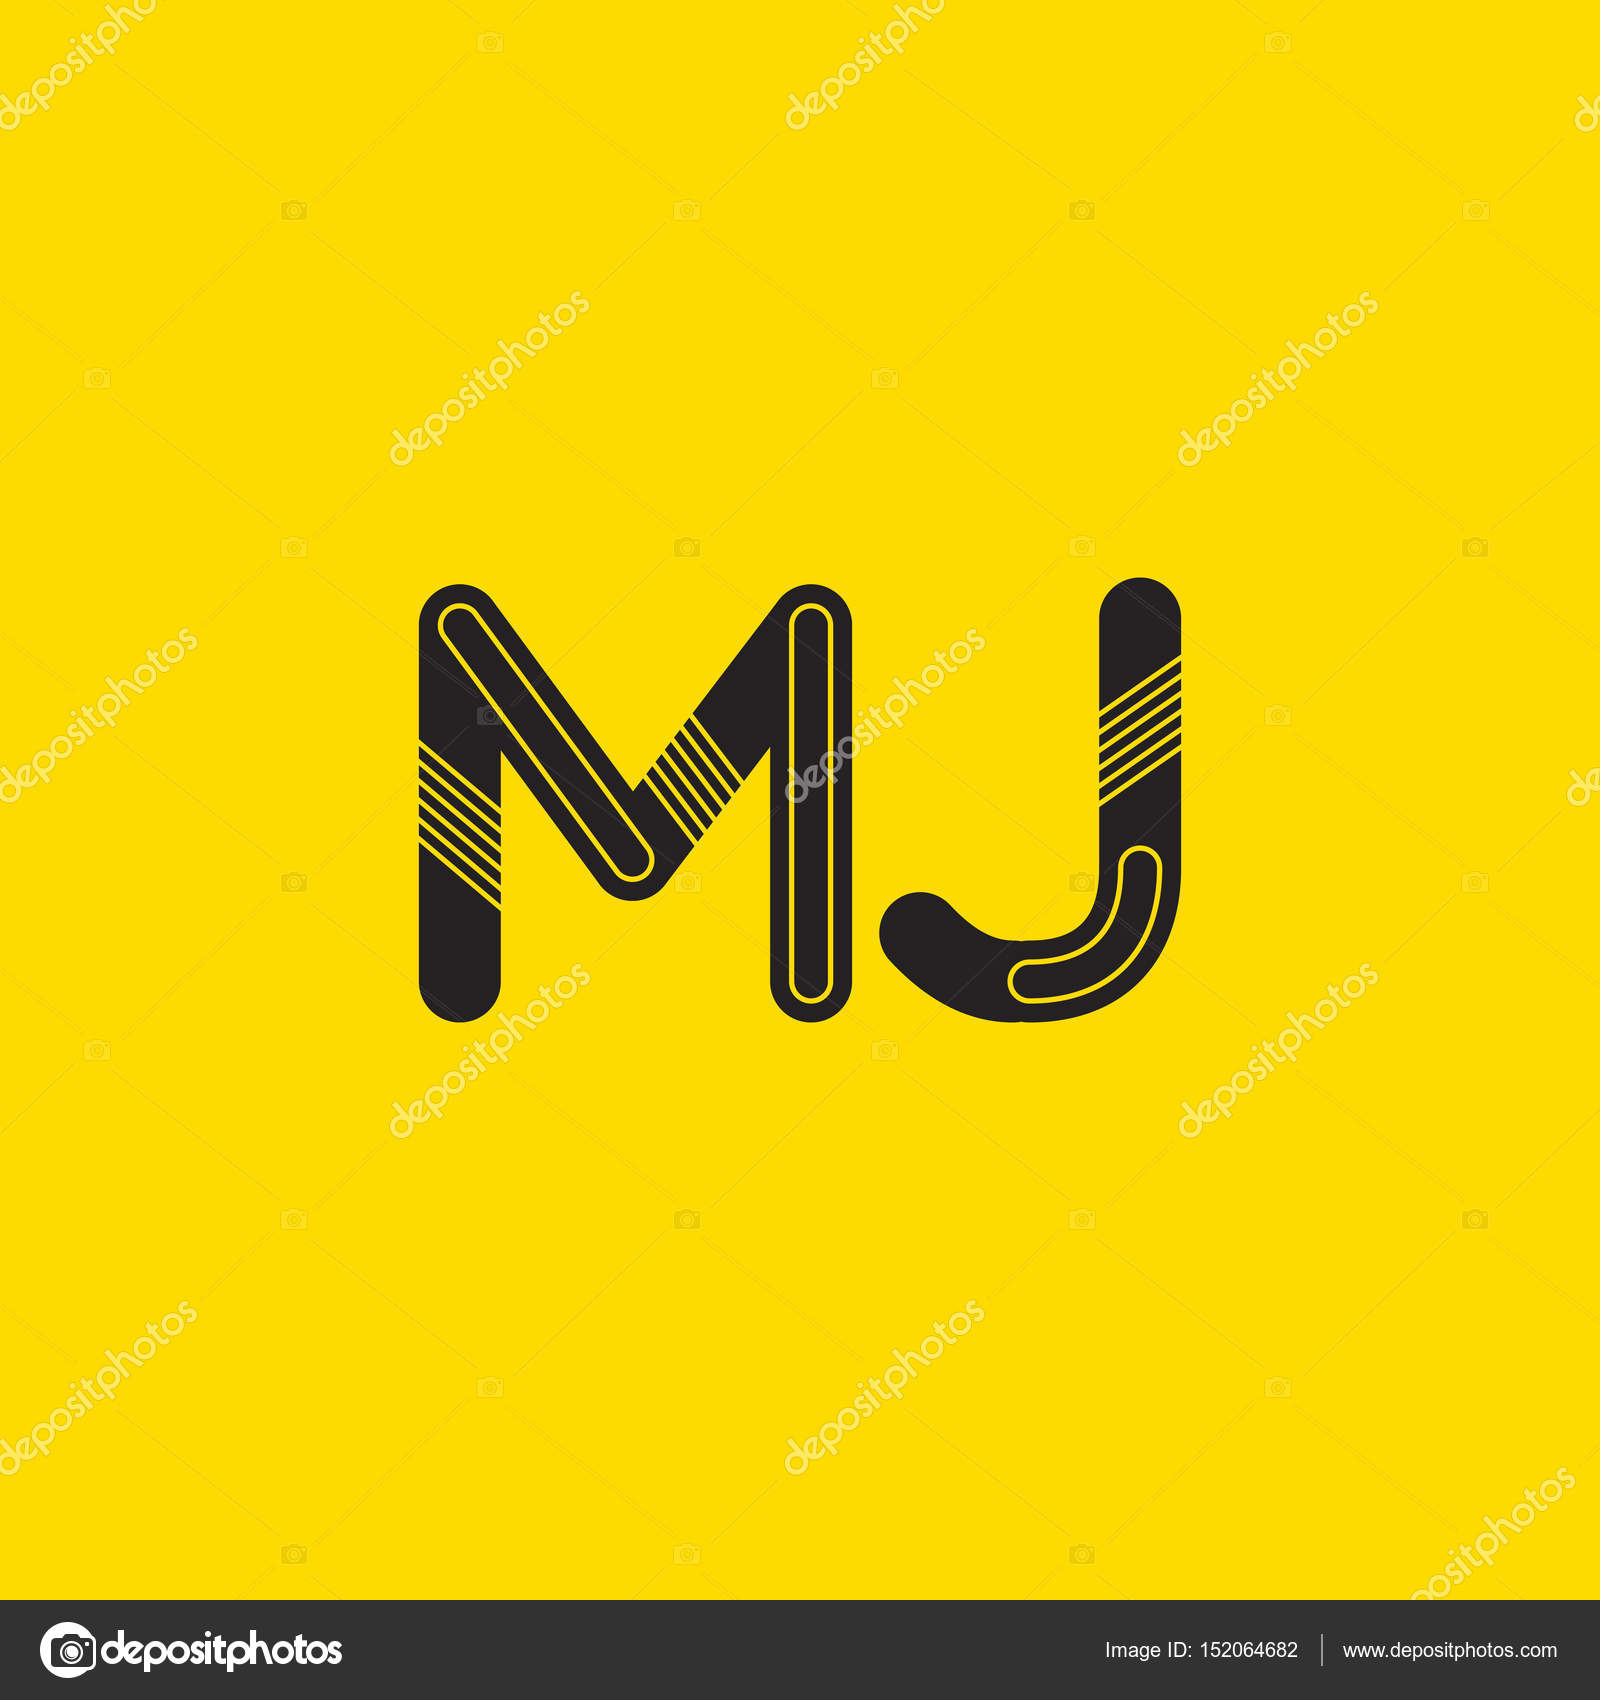 Mj Connected Letters Logo Stock Vector C Brainbistro